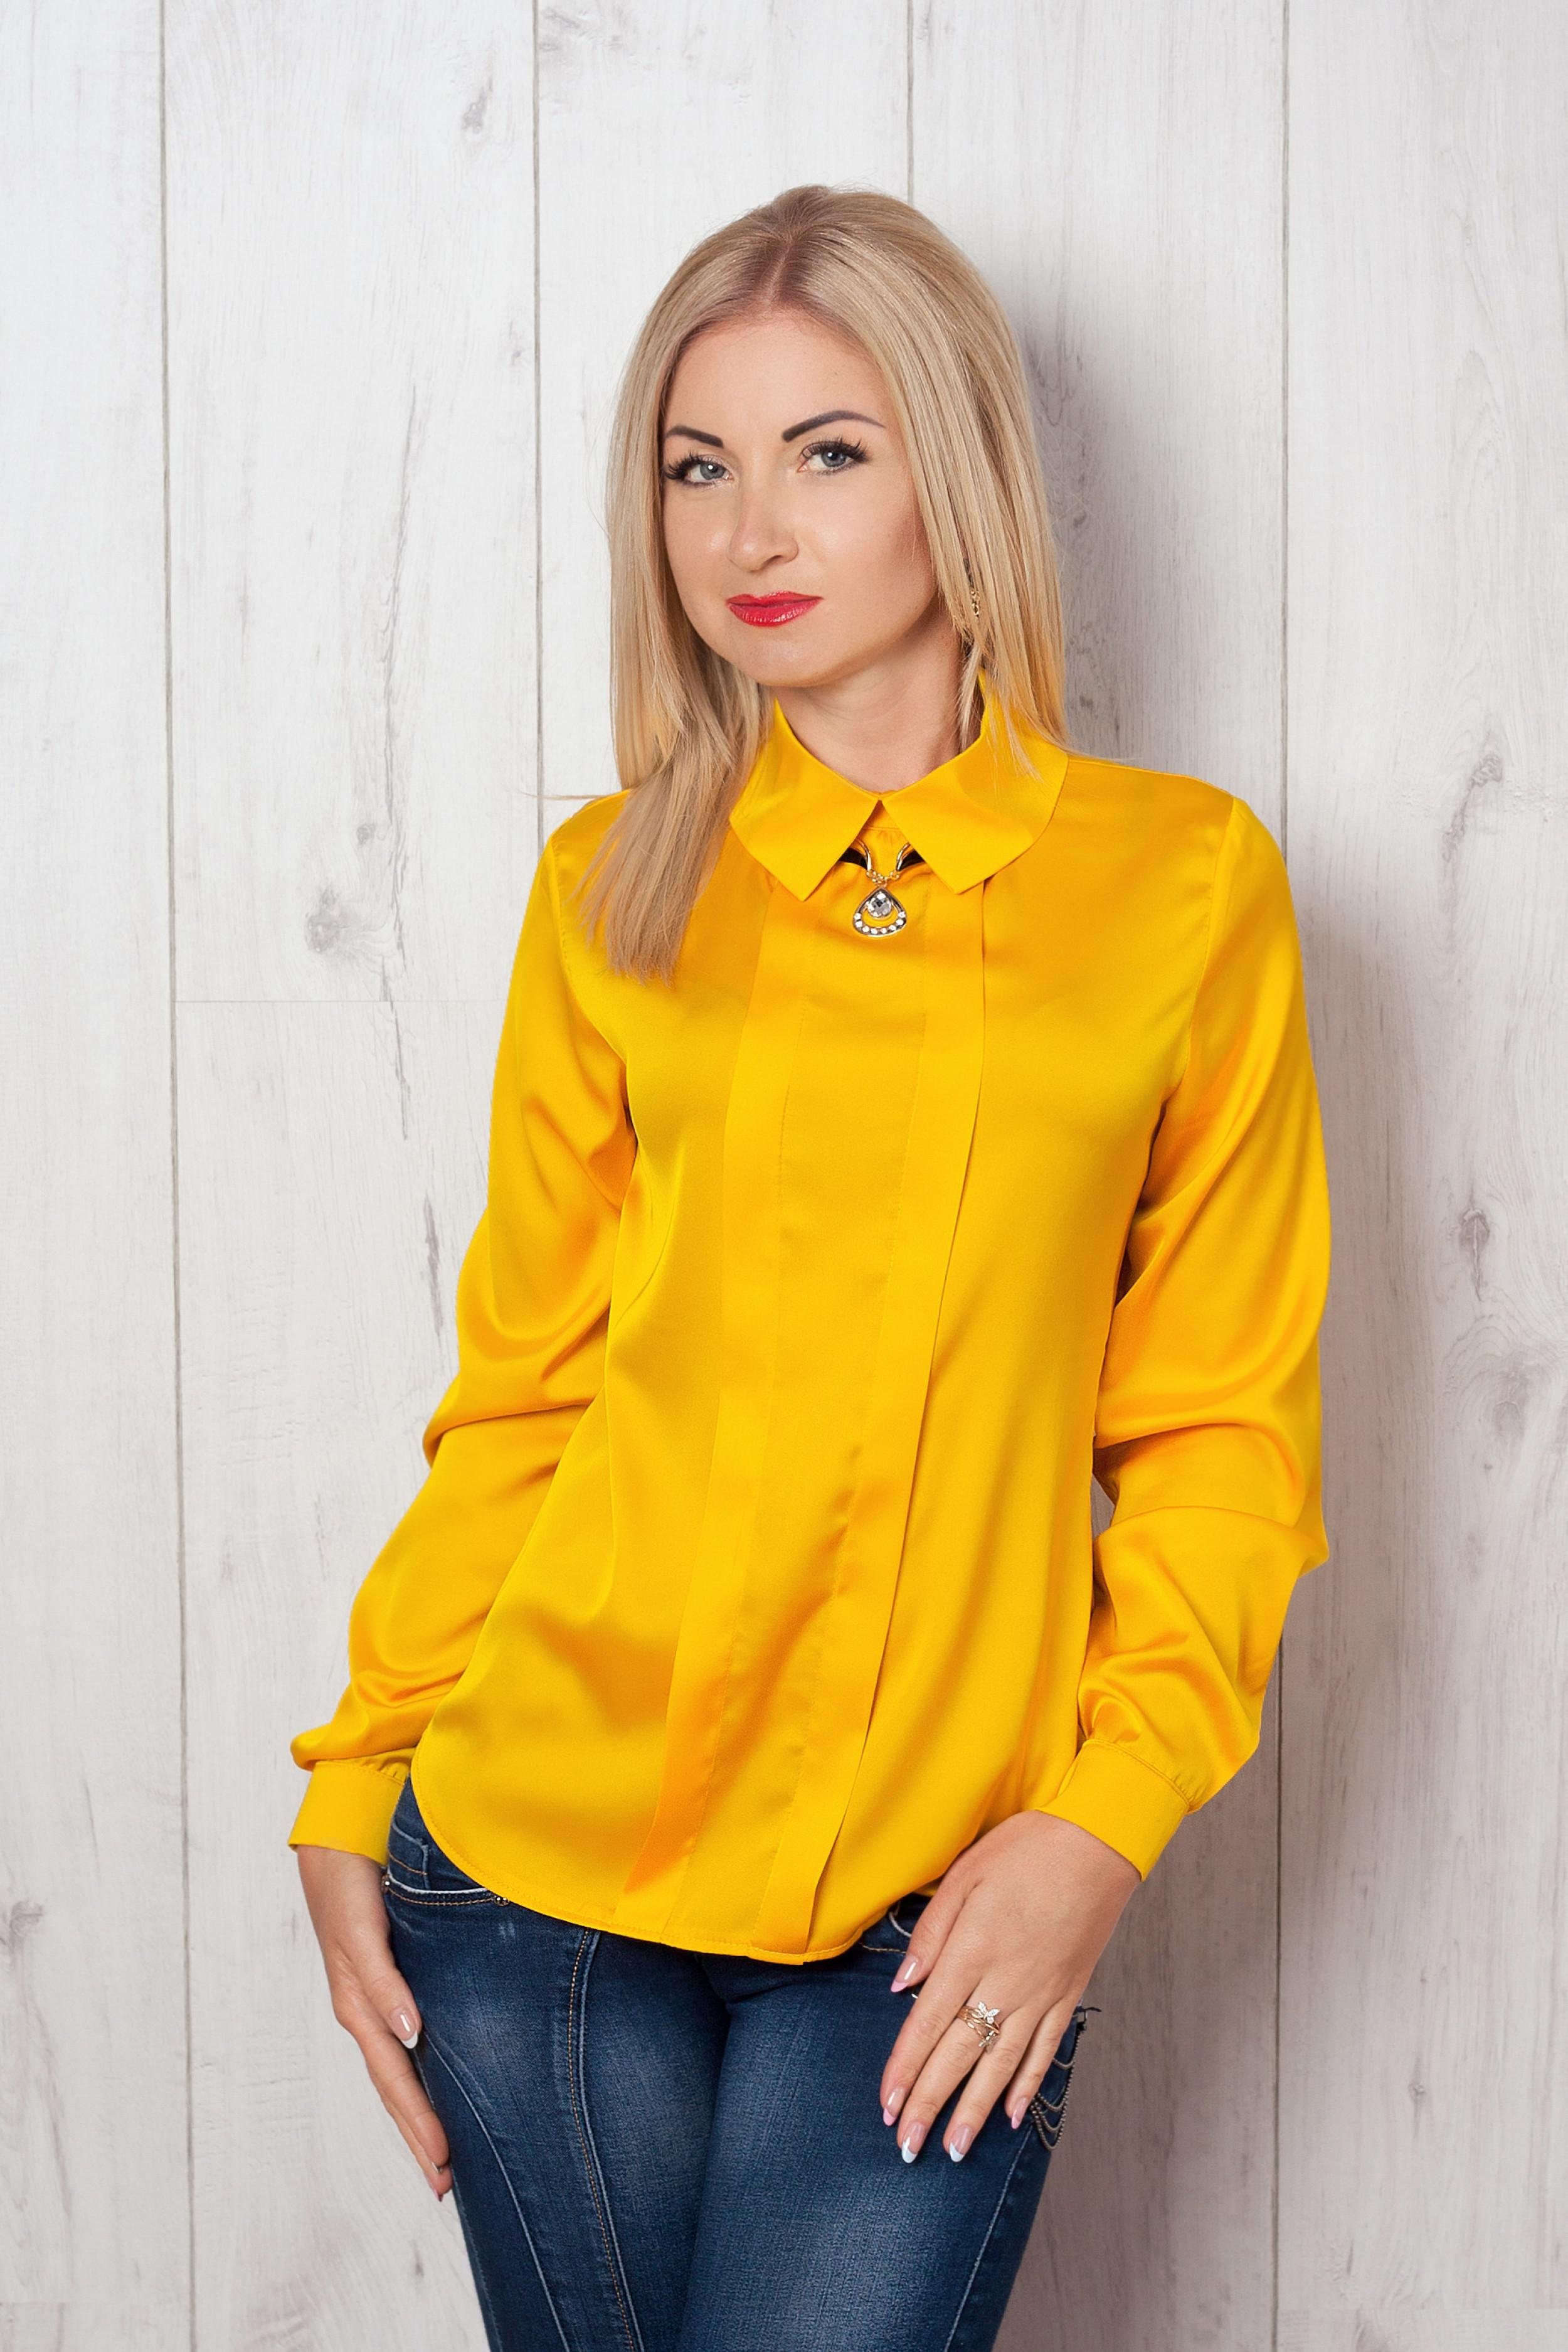 Горчичная рубашка. Желтая блузка. Блузка женская желтая. Желтая рубашка женская. Желтая шелковая блузка.